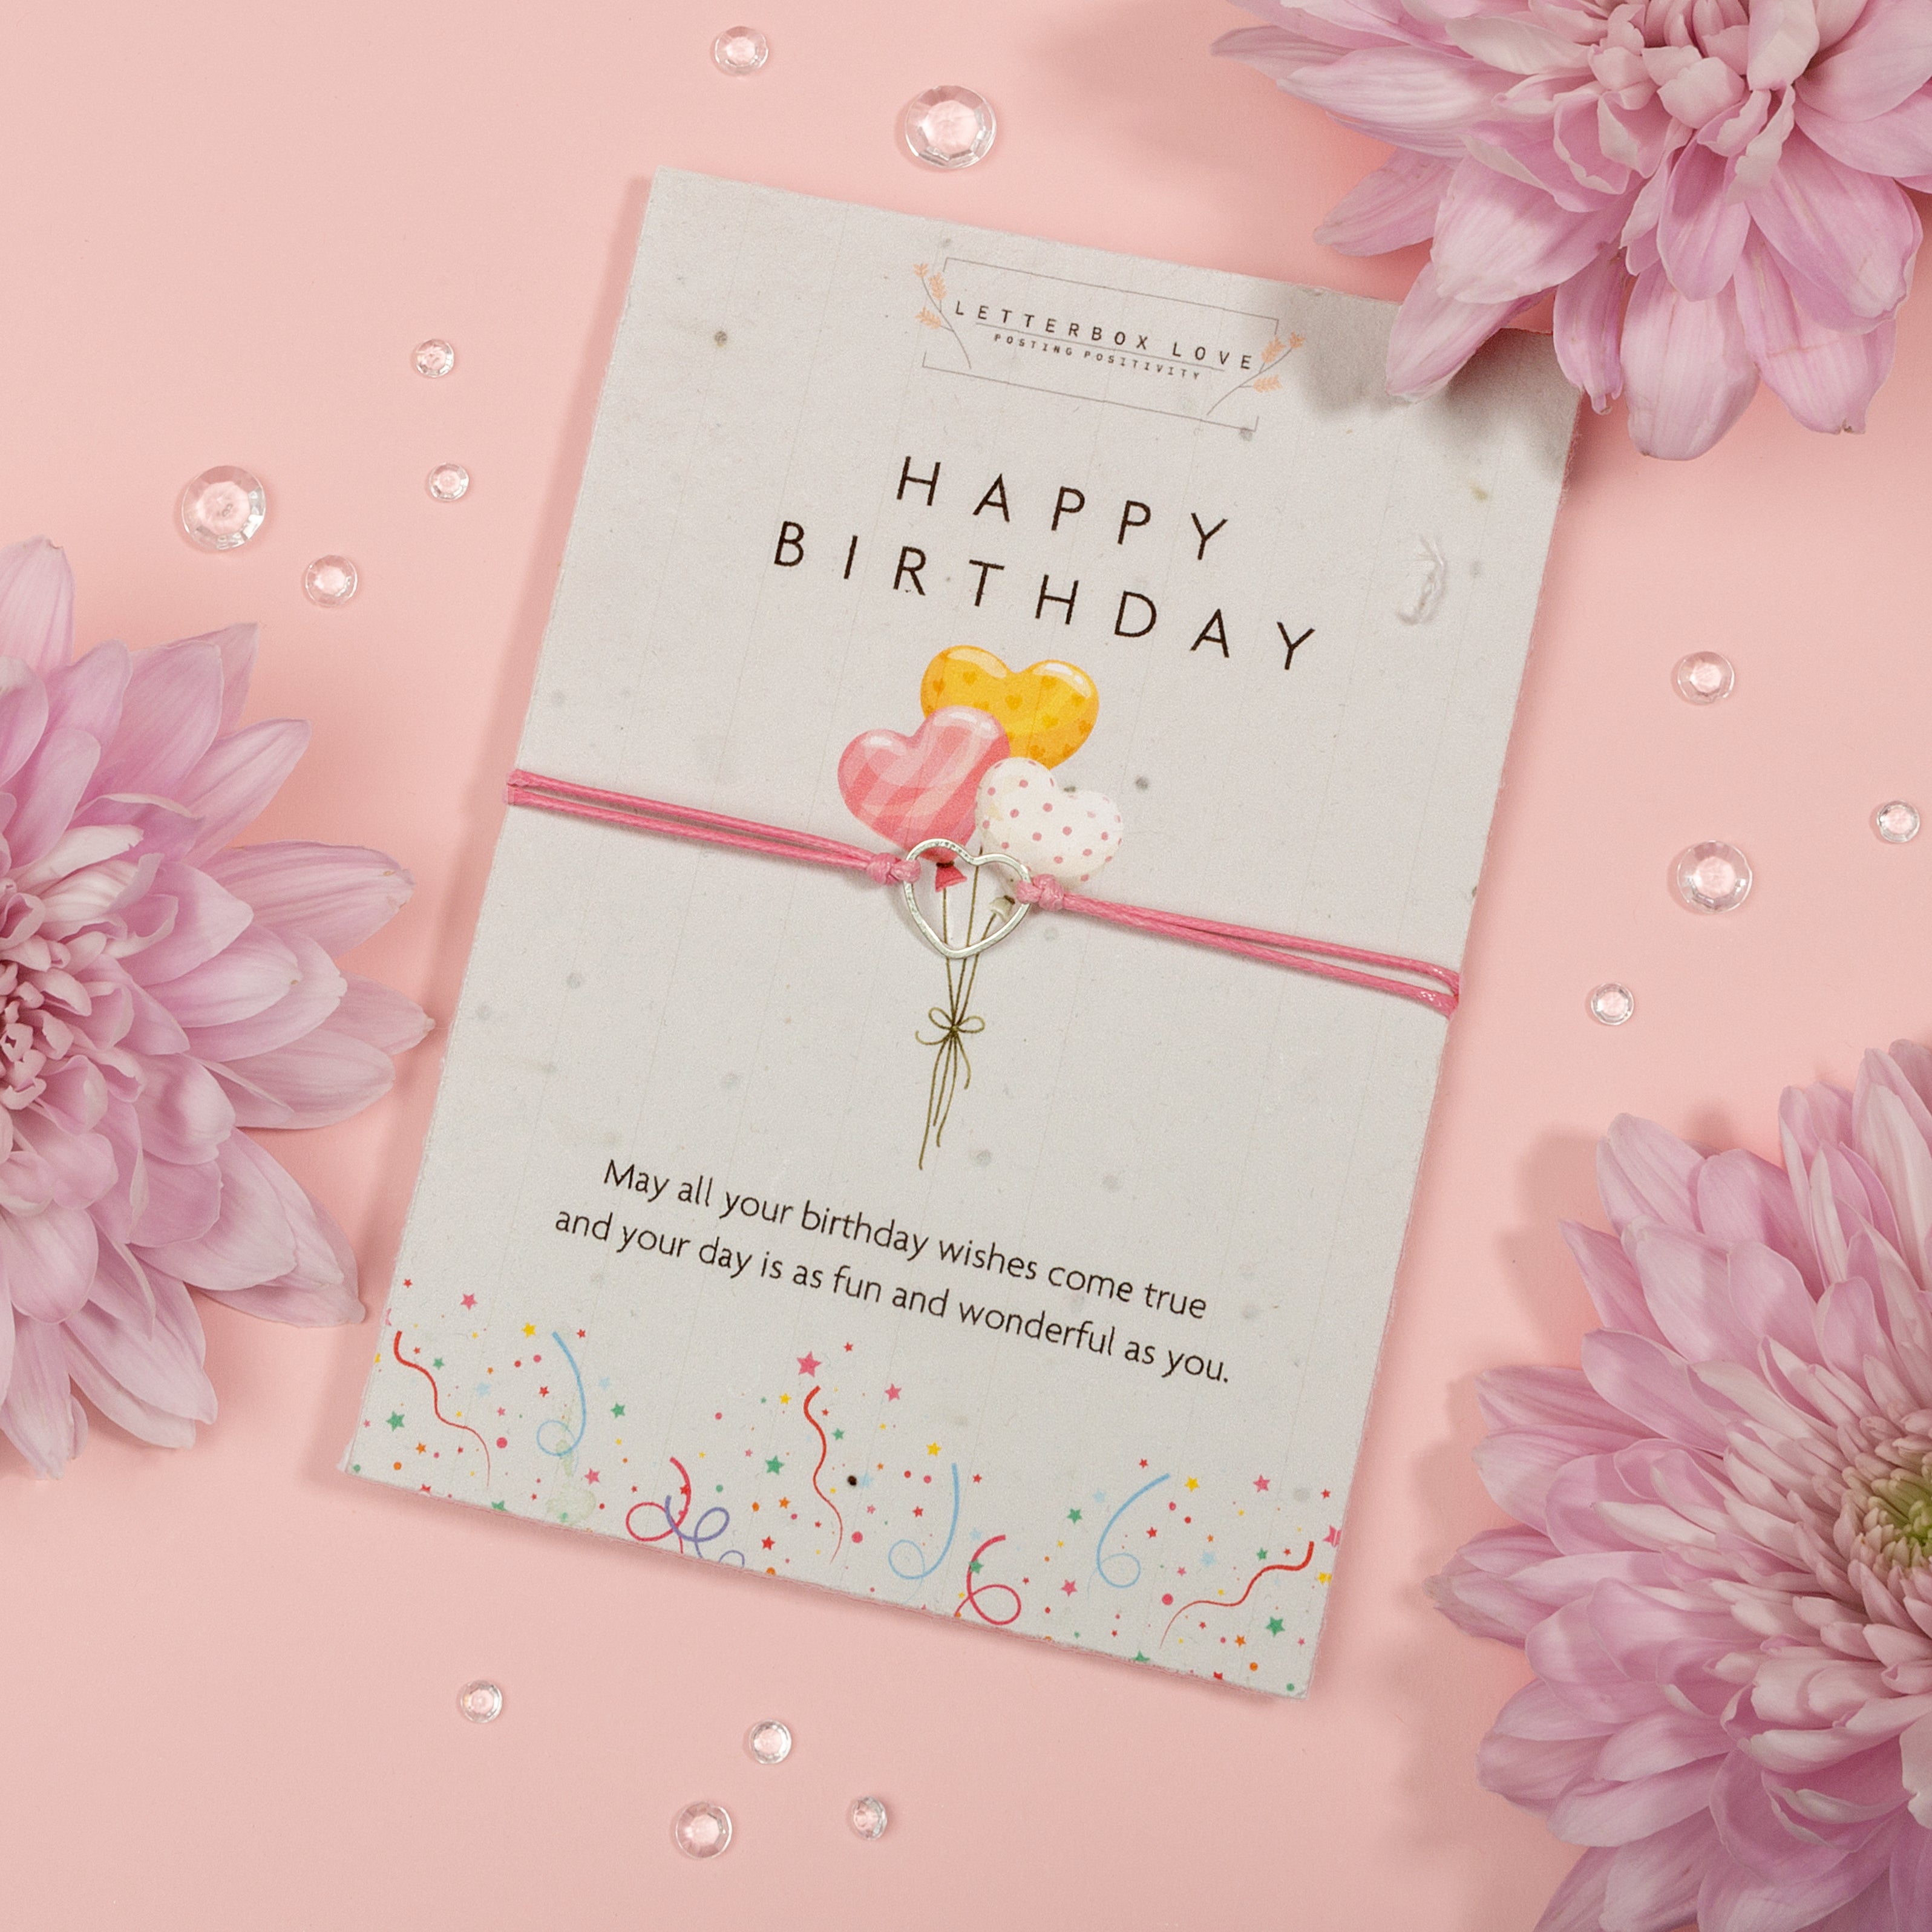 Letterbox Love Seed Card & Wish Bracelet - Happy Birthday